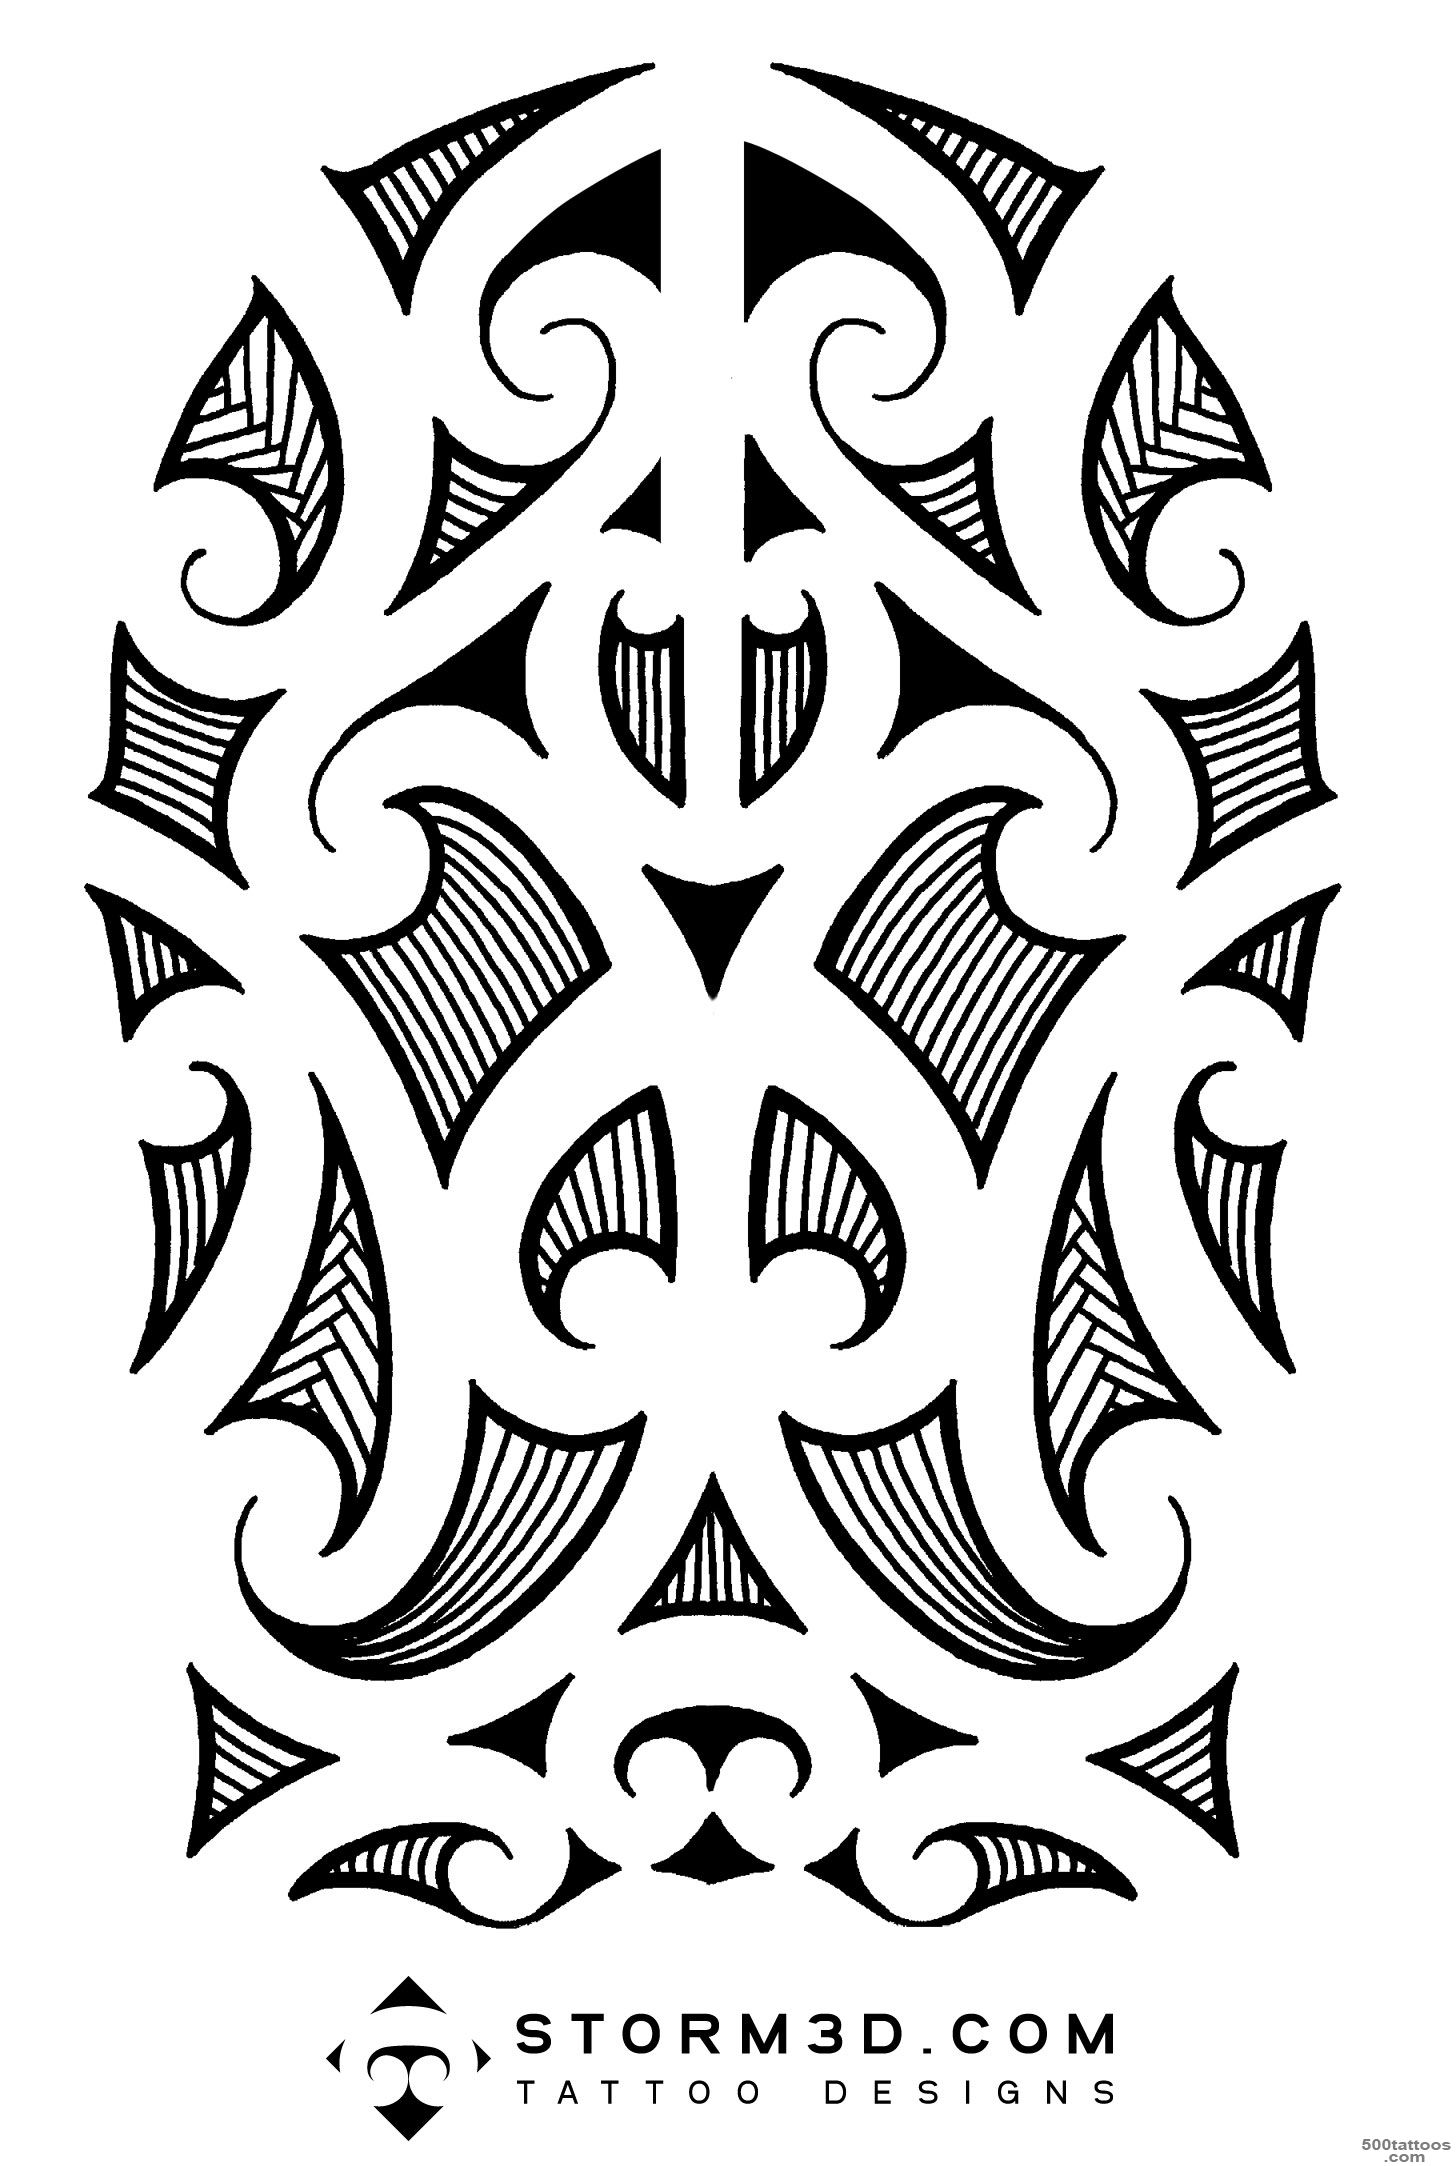 Maori, Samoan and Polynesian inspired tattoo designs, hand drawn ..._42